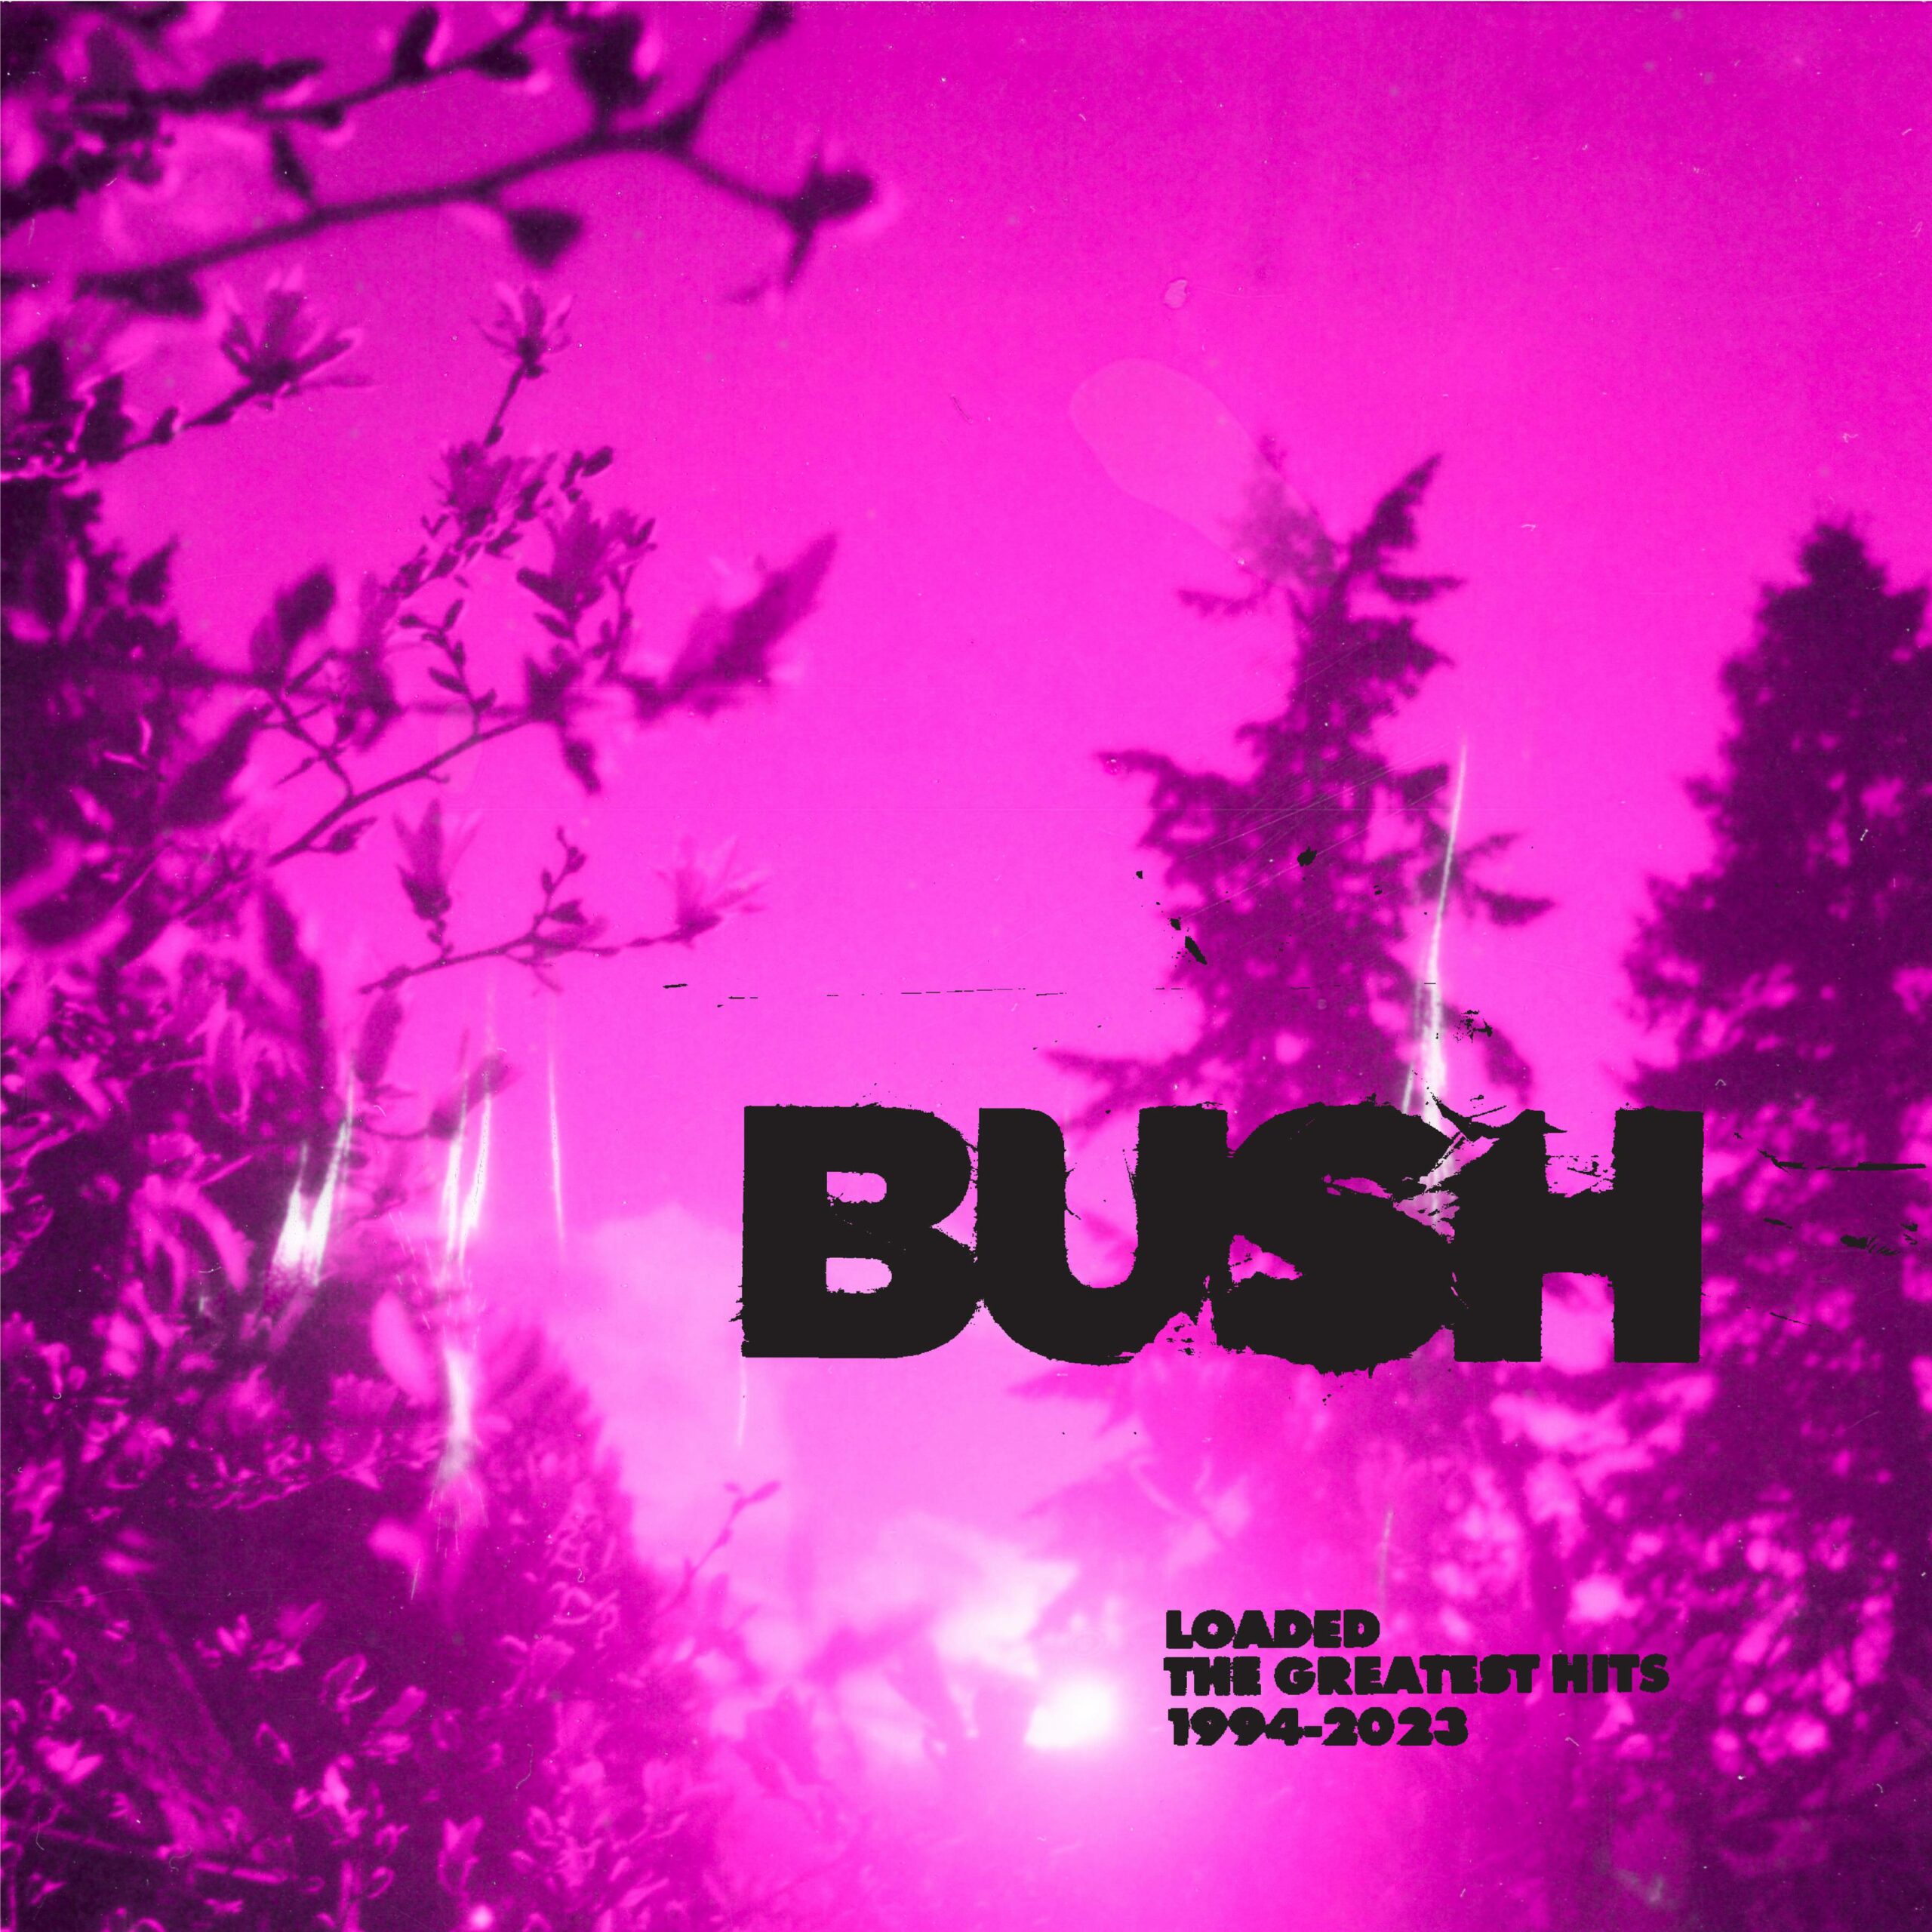 Bush (UK) – Loaded – The Geatest Hits 1994-2023